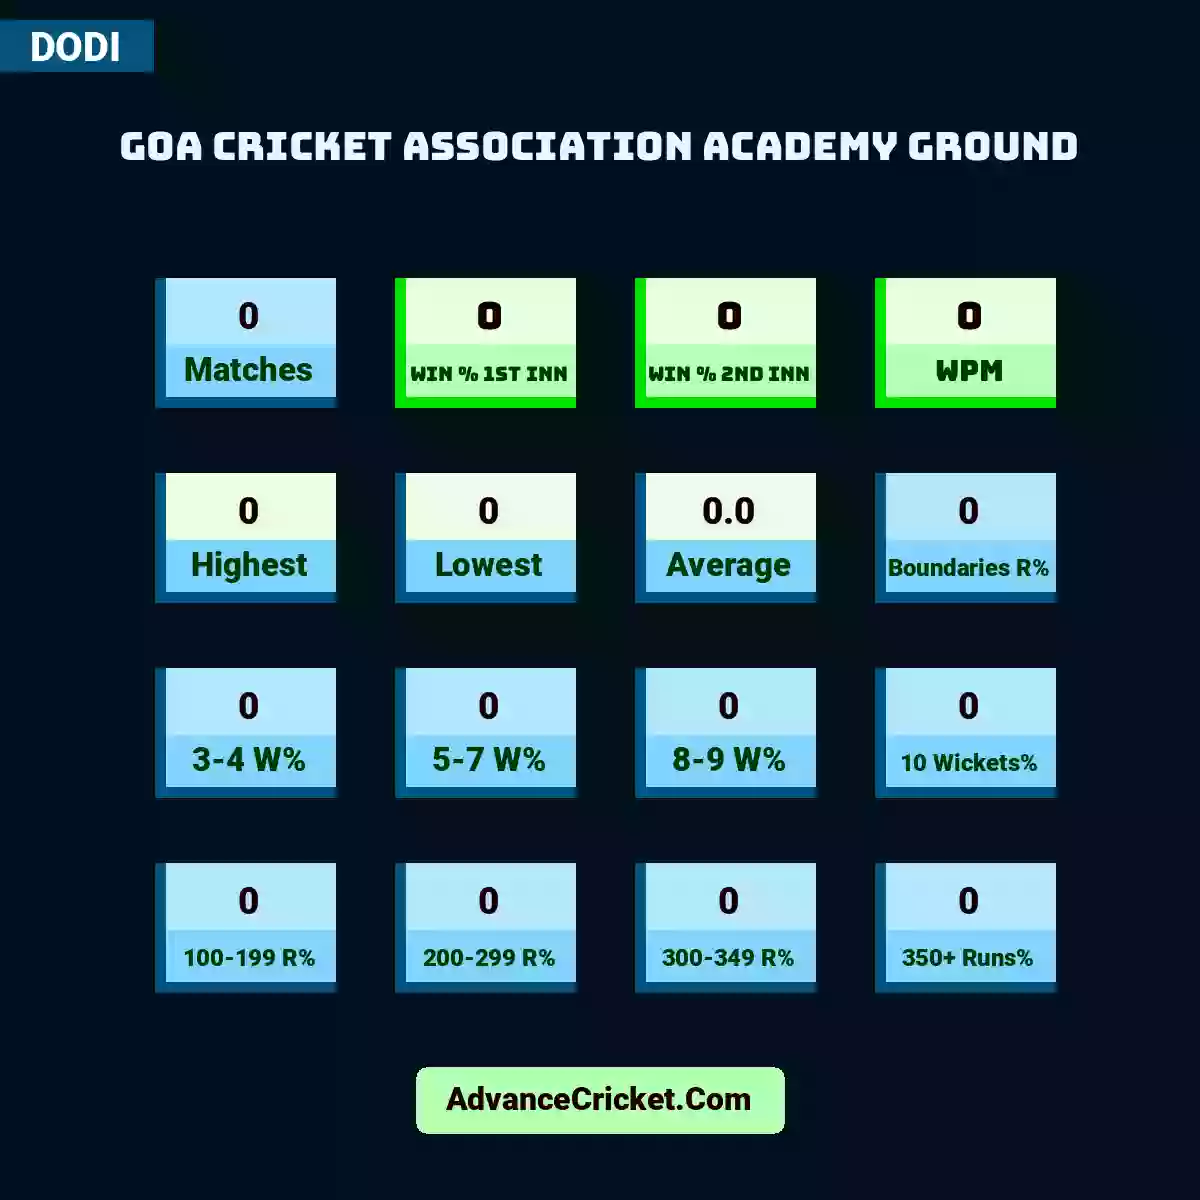 Image showing Goa Cricket Association Academy Ground with Matches: 0, Win % 1st Inn: 0, Win % 2nd Inn: 0, WPM: 0, Highest: 0, Lowest: 0, Average: 0.0, Boundaries R%: 0, 3-4 W%: 0, 5-7 W%: 0, 8-9 W%: 0, 10 Wickets%: 0, 100-199 R%: 0, 200-299 R%: 0, 300-349 R%: 0, 350+ Runs%: 0.